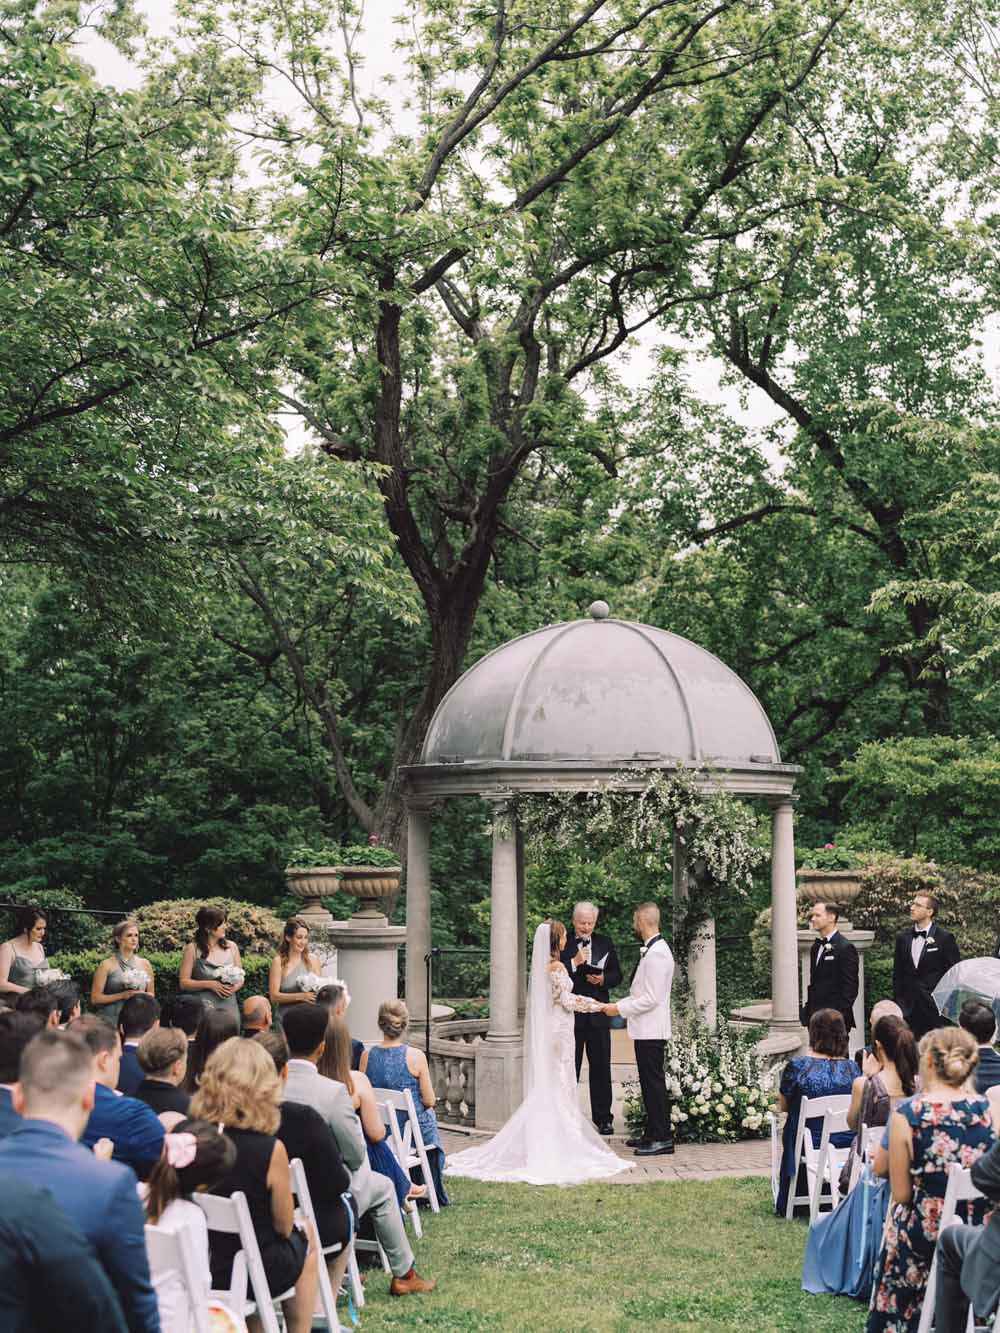 Omni Shoreham DC wedding - Bridgerton inspired - regency theme - blue and white - floral